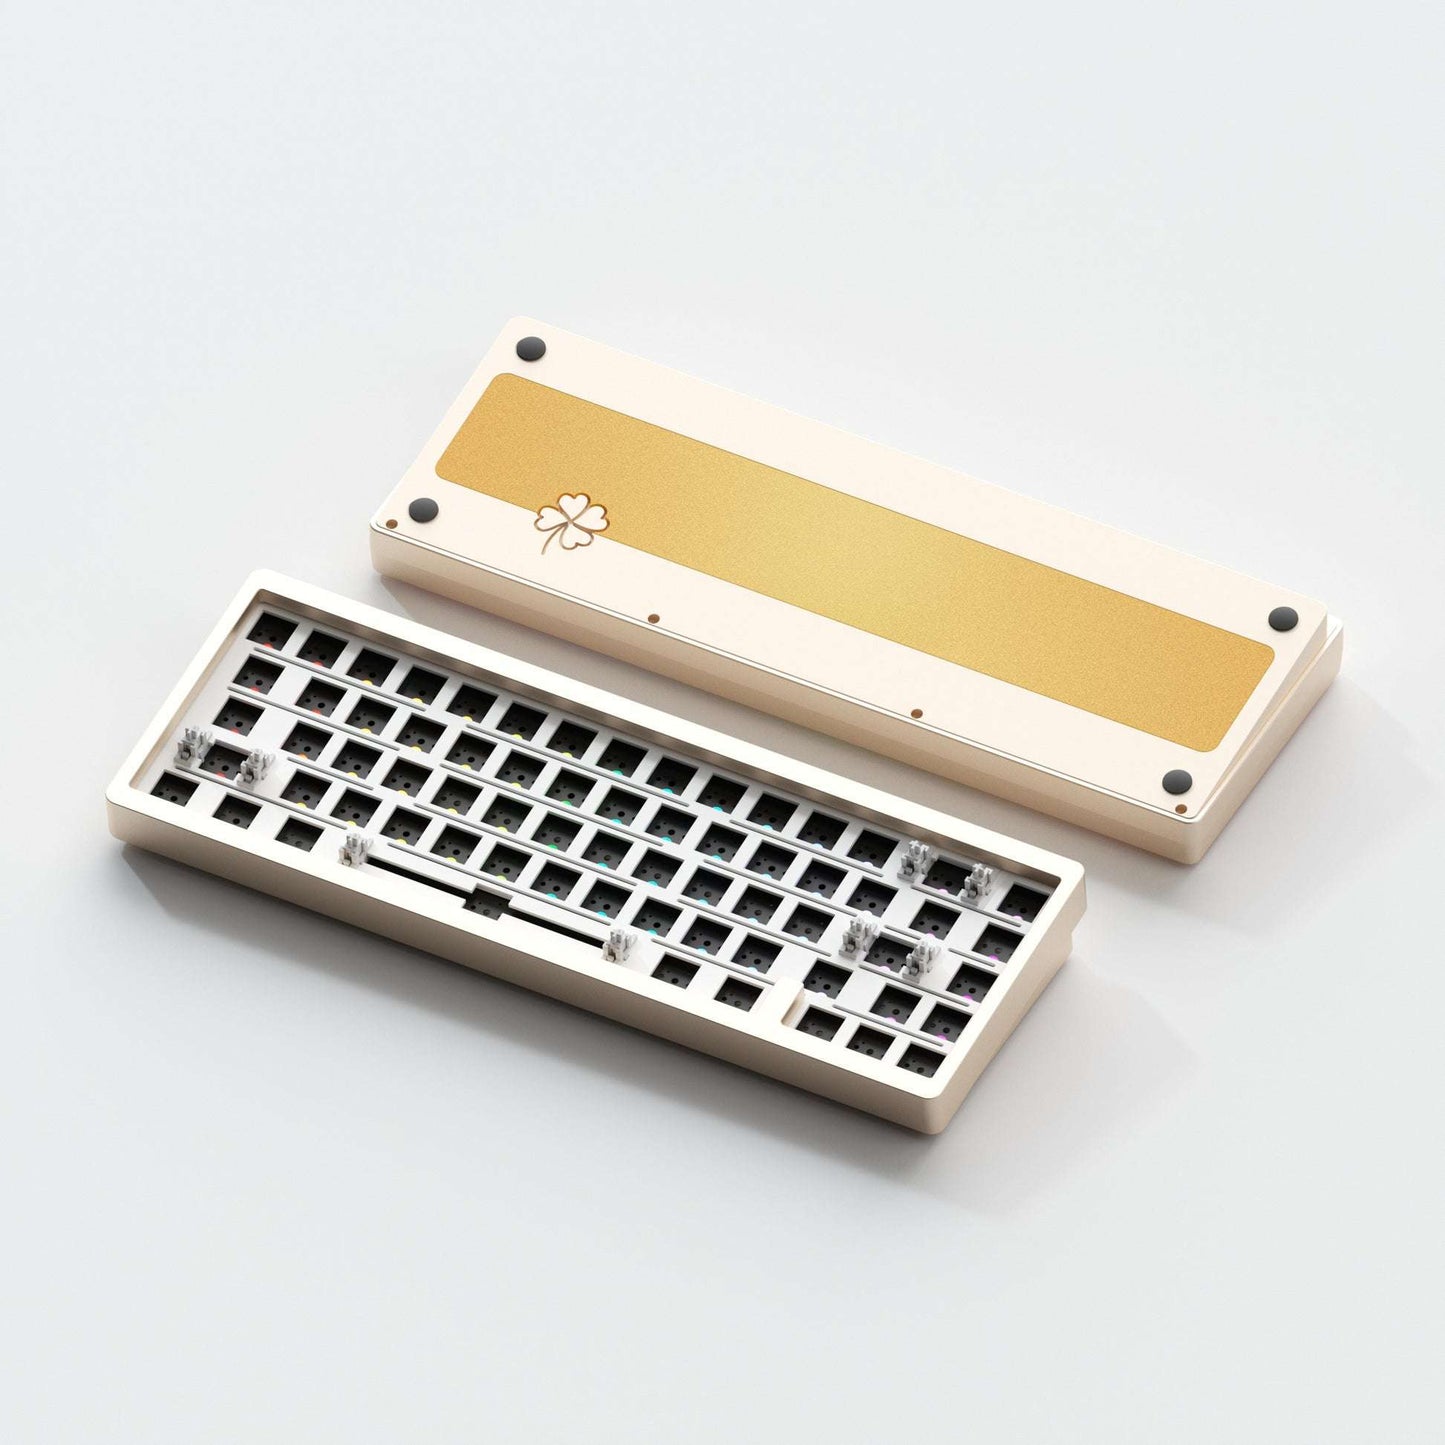 Lucky65 Aluminum Mechanical Keyboard Barebone